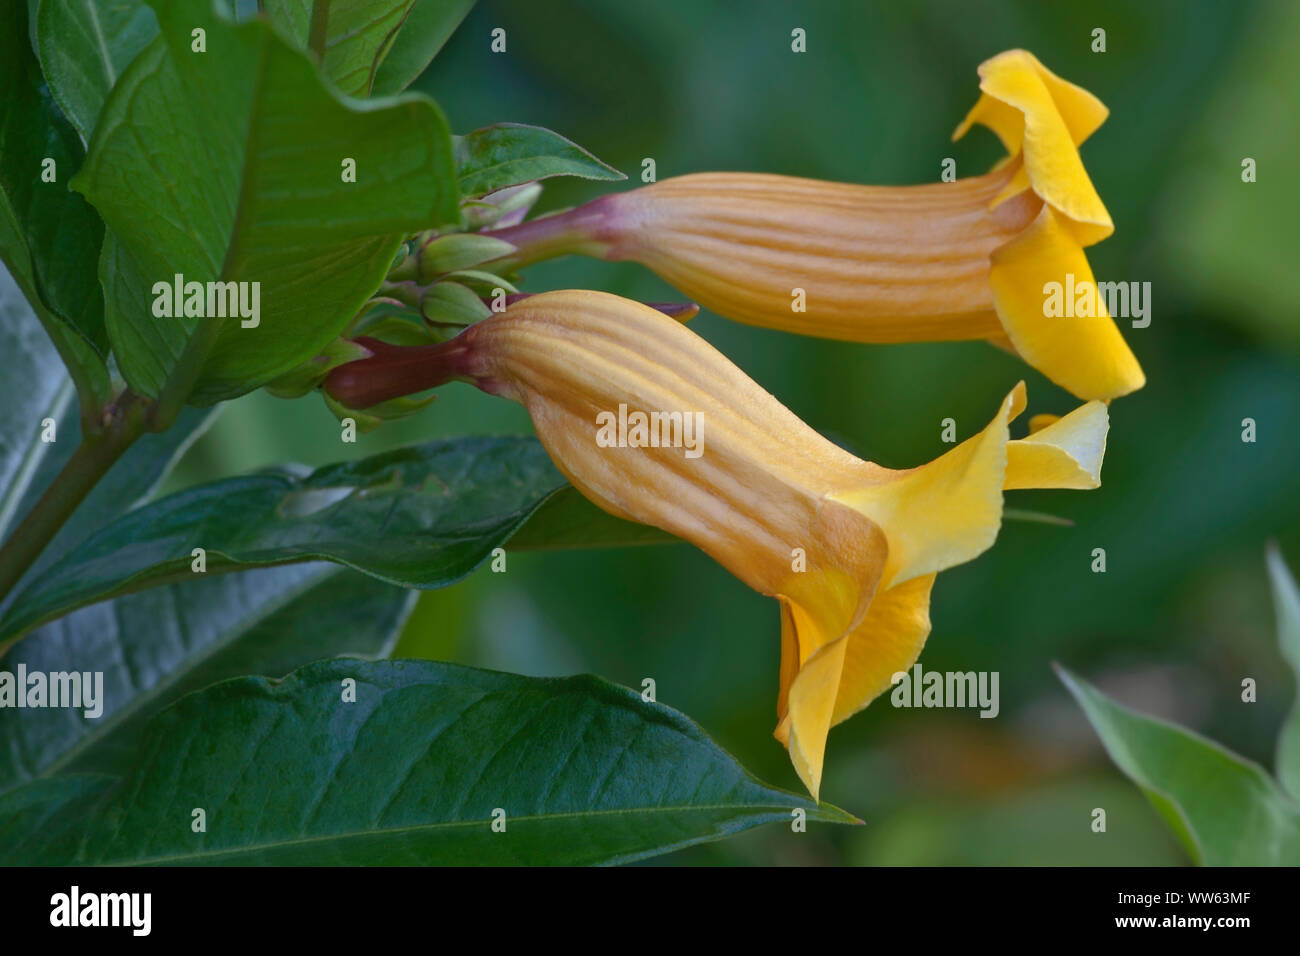 Bush Allamanda, Allamanda schottii, Yellow trumpet shaped flowers growing outdoor. Stock Photo